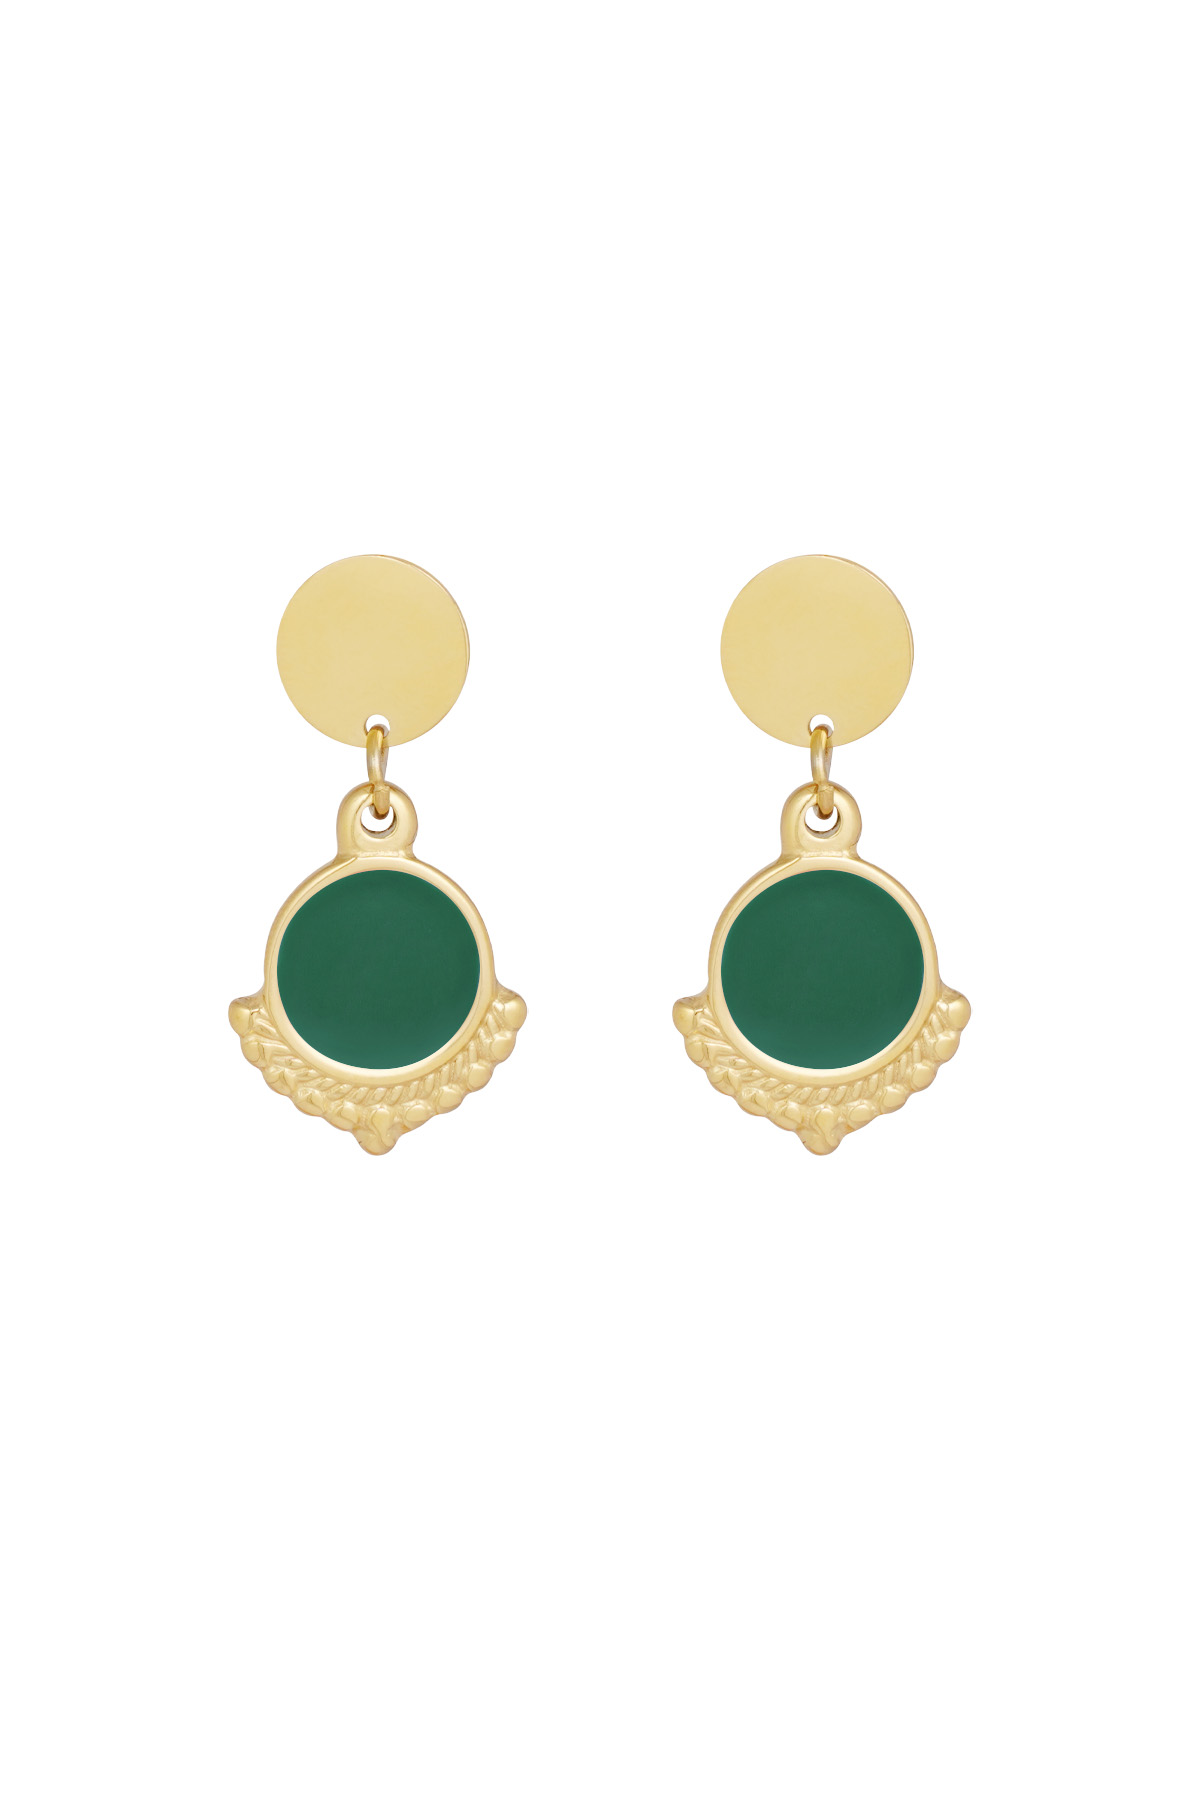 Earrings cherish life - green gold